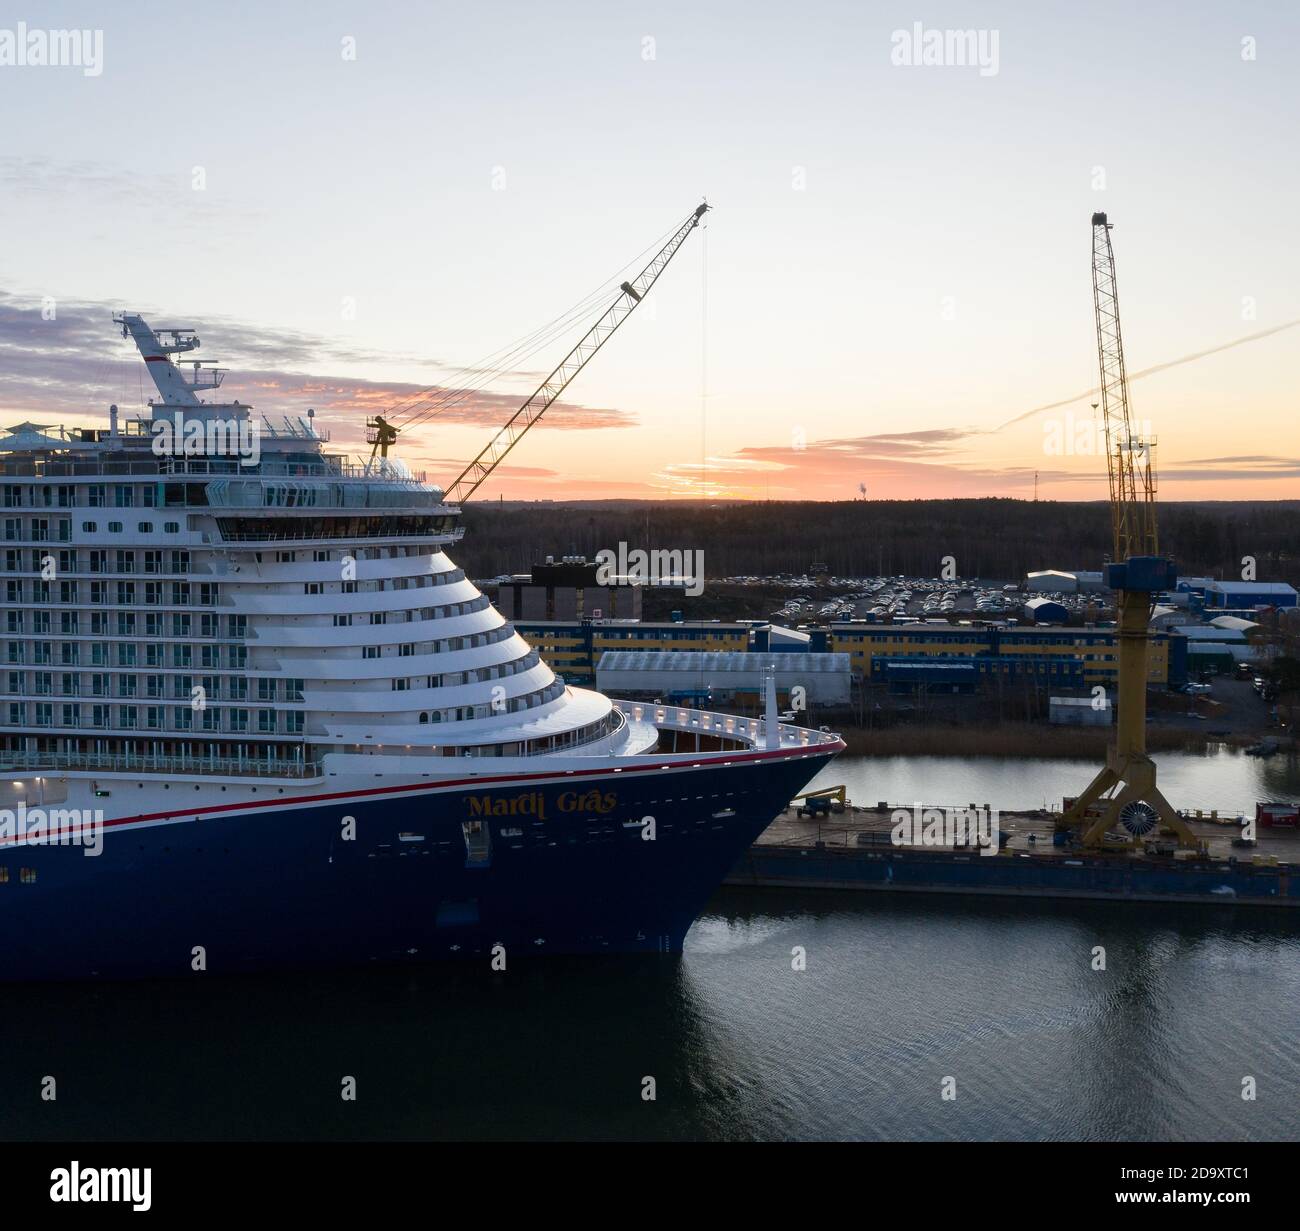 TURKU, FINLAND - 06/11/2020: Mardi Gras cruise vessel in Meyer Turku Shipyard. Stock Photo